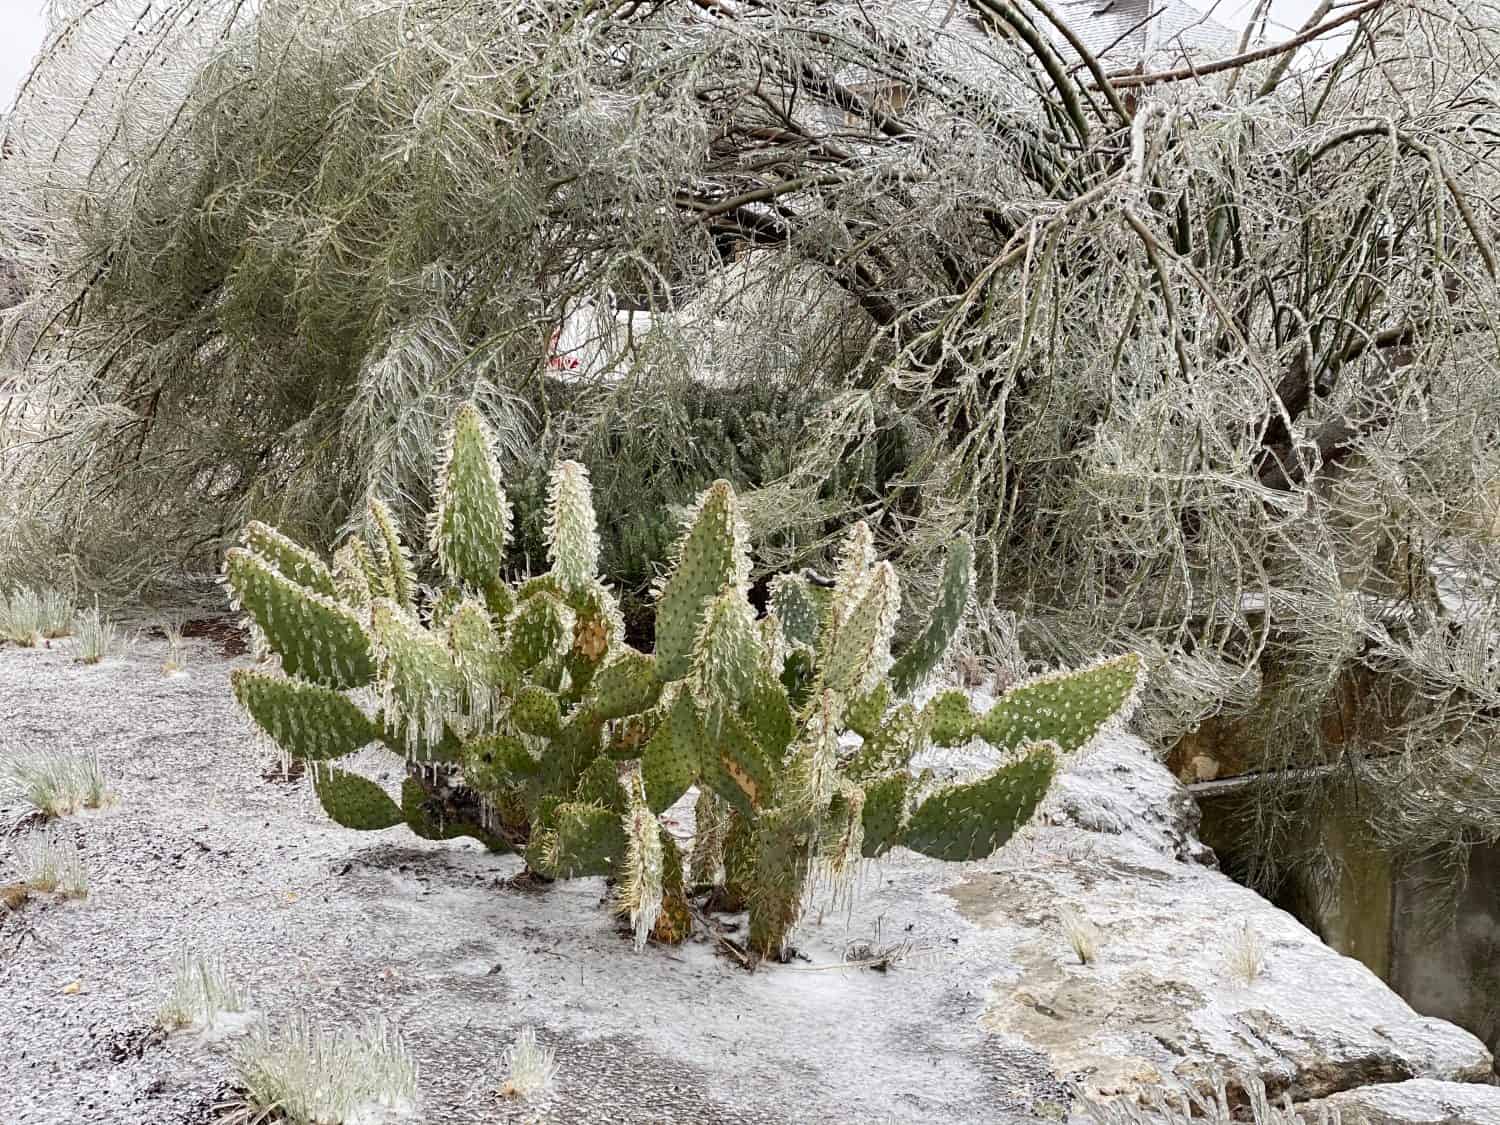 Winter storm in Austin Texas. Cacti in ice. Freezing rain. Winter scene. Natural disaster